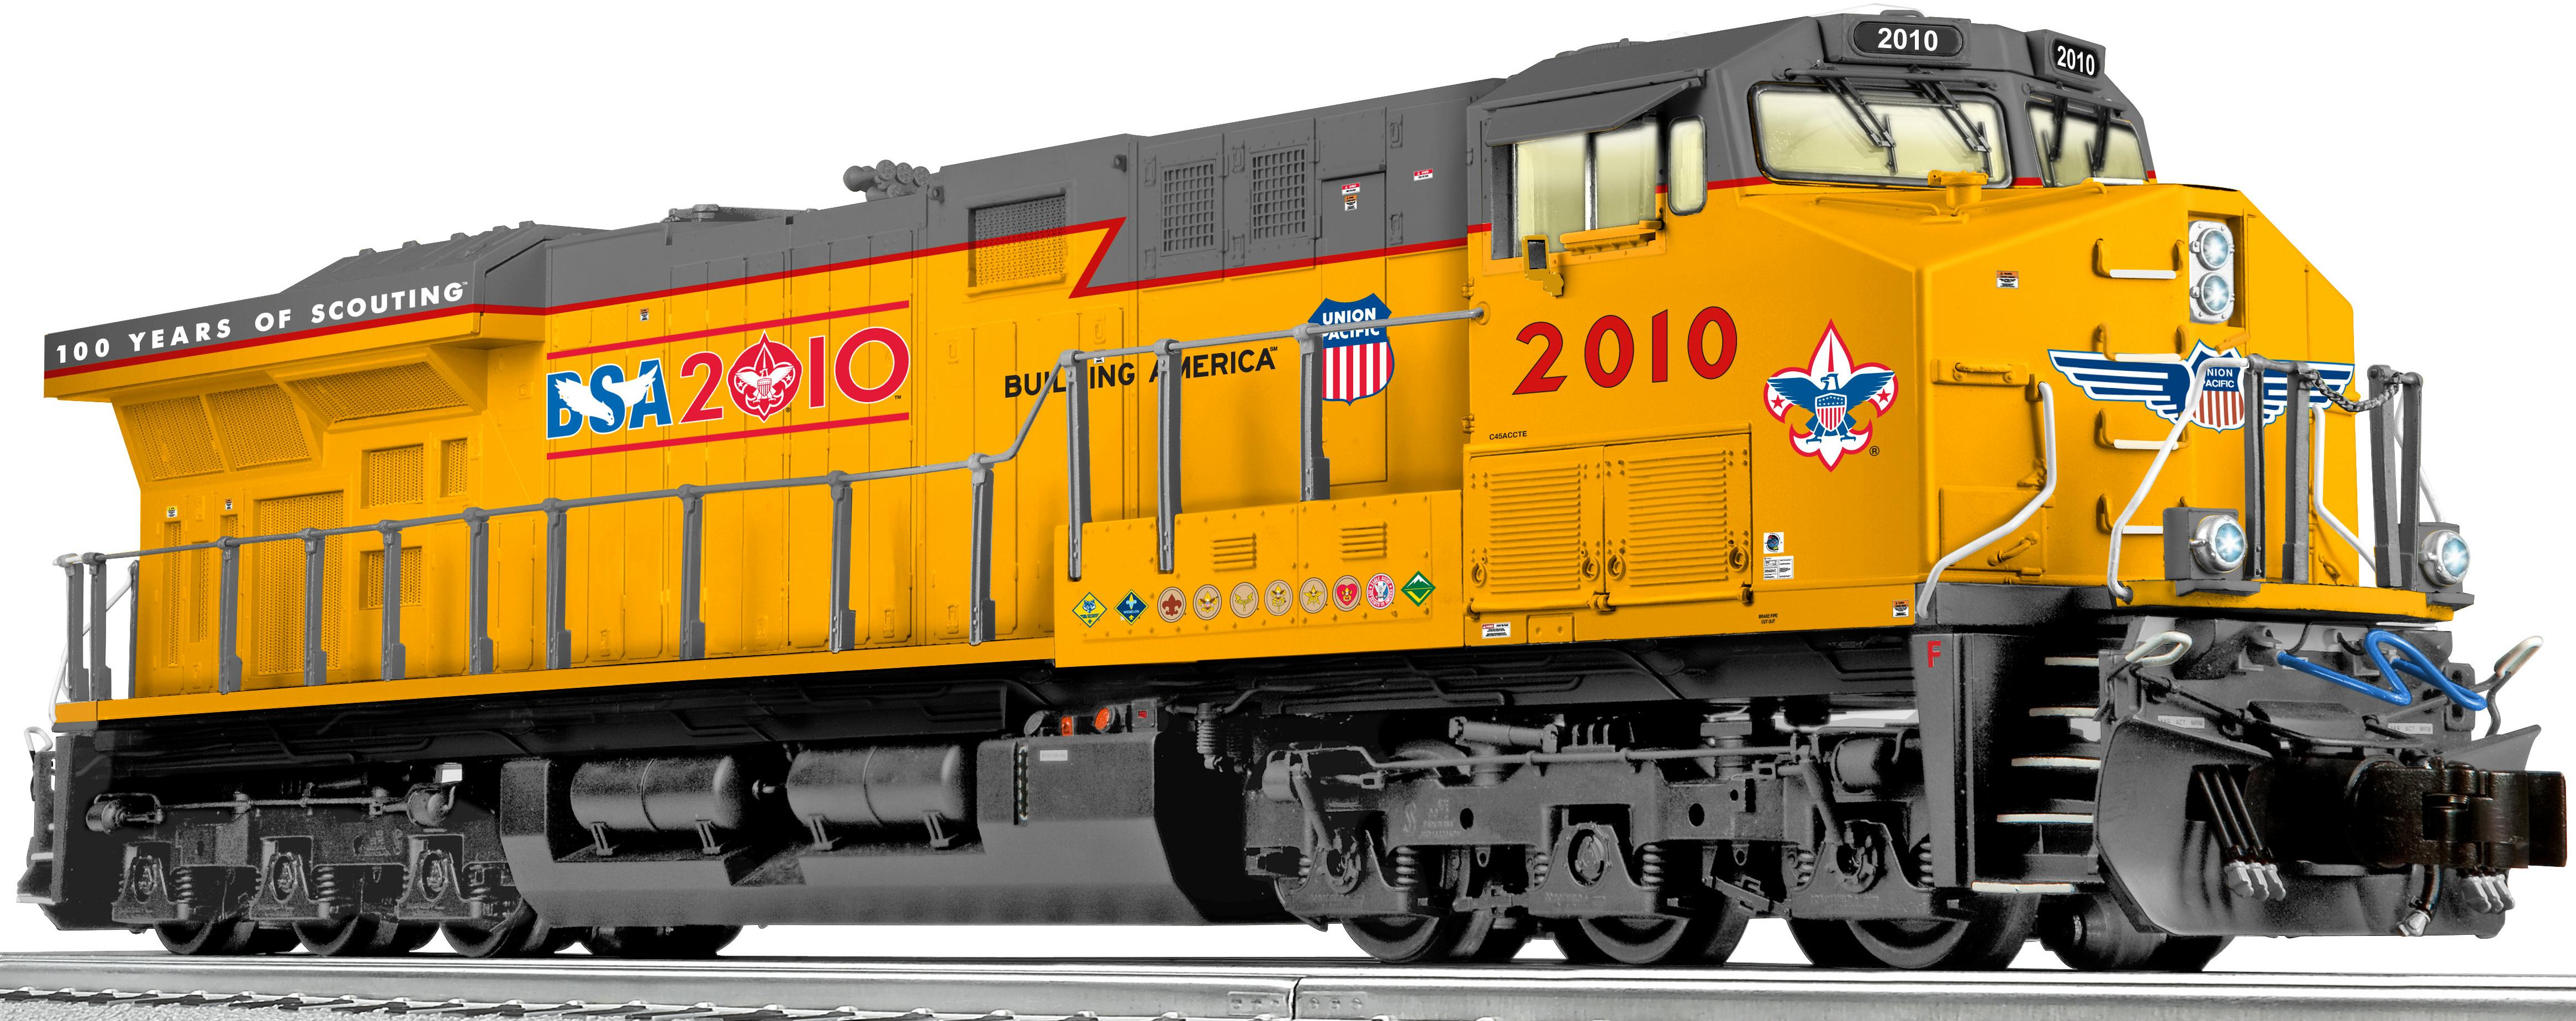 Union Pacific Boy Scouts of America® LEGACY ES44AC Diesel Locomotive image